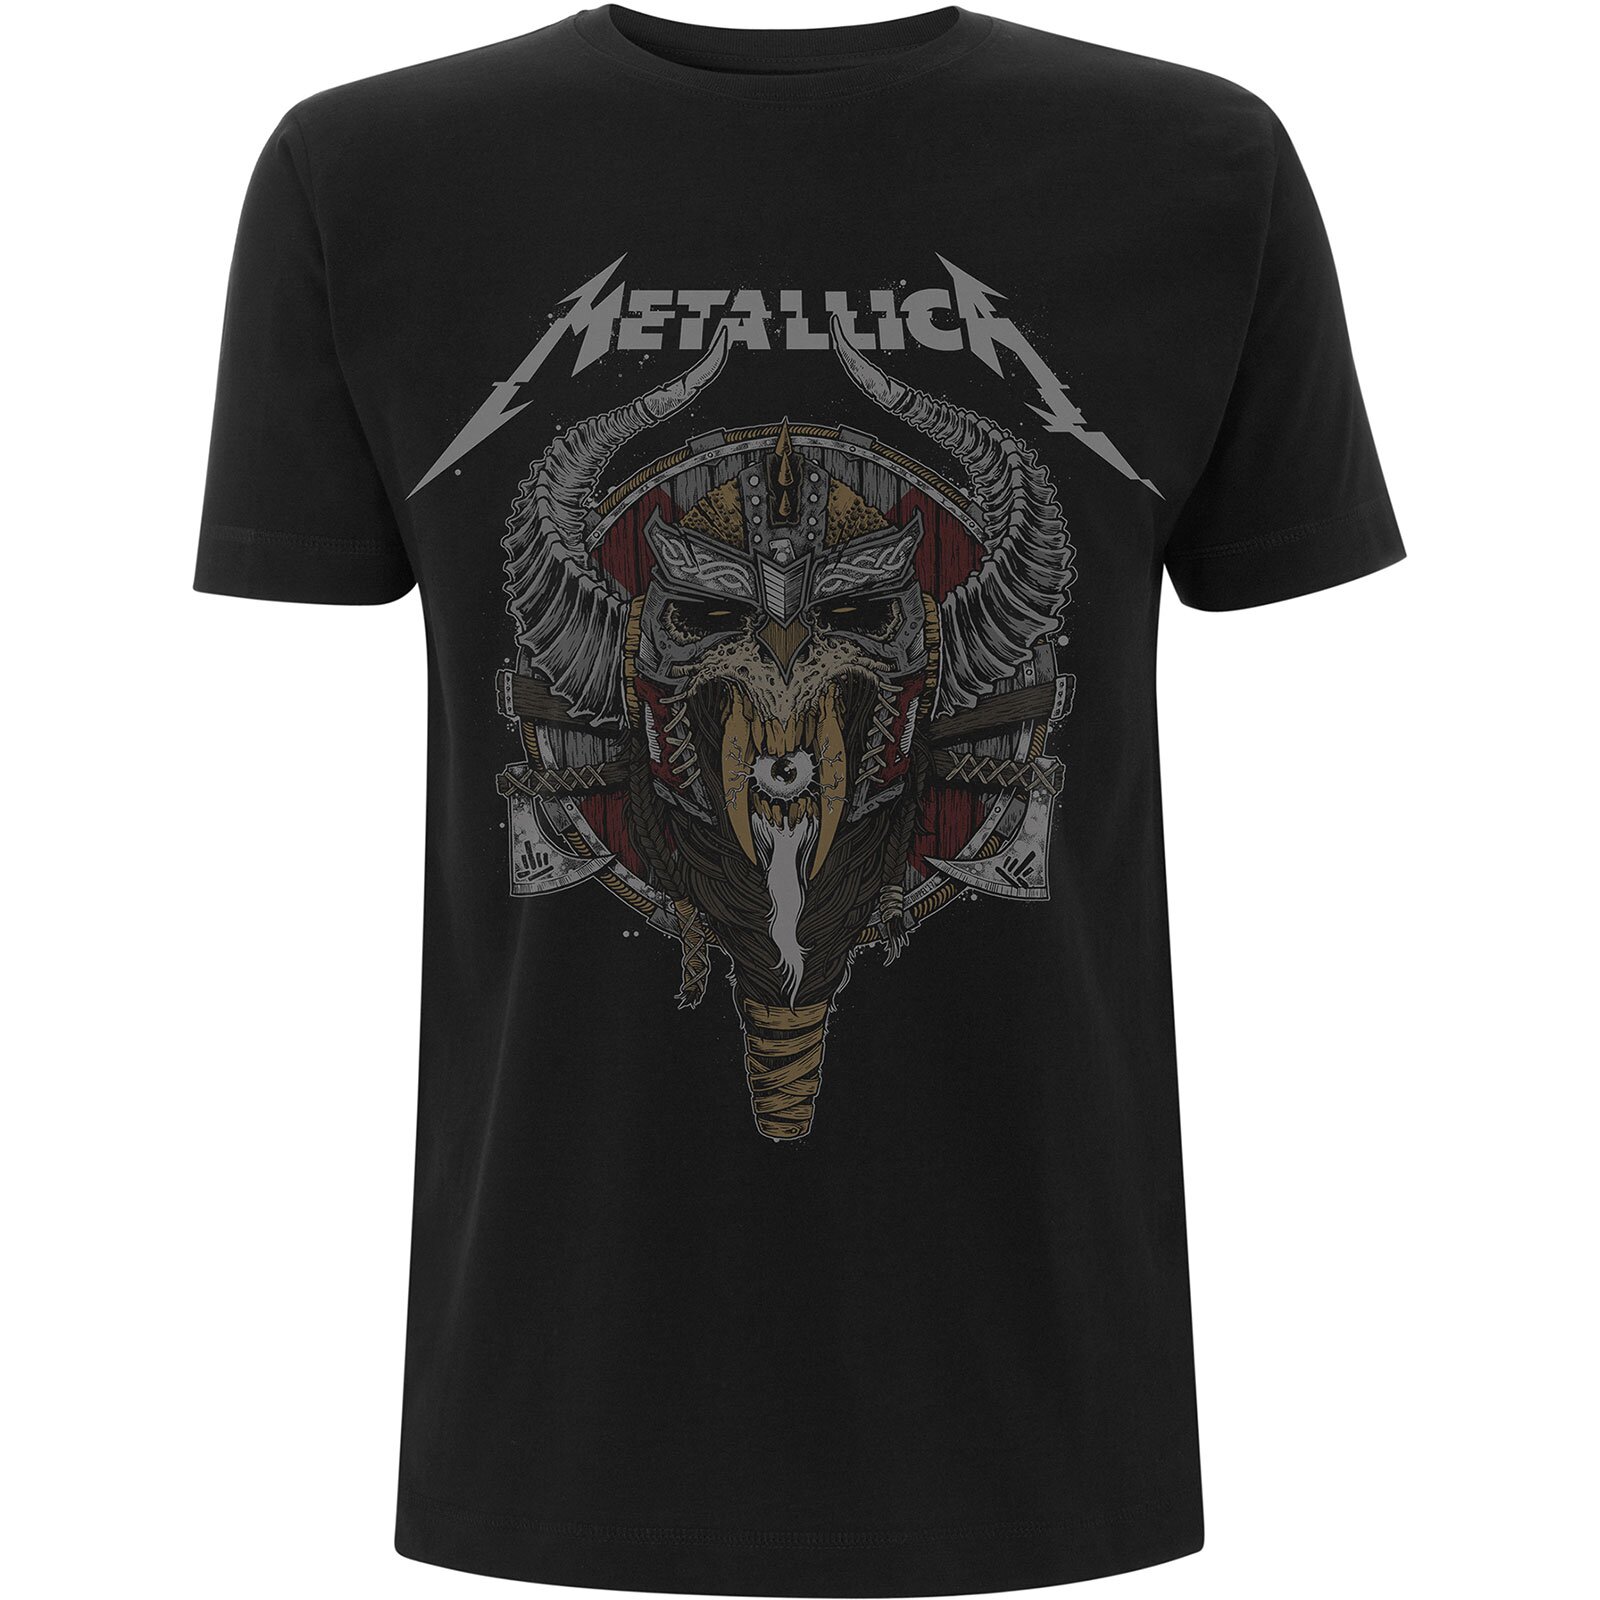 Rockoff Metallica Viking T-Shirt Size XL : photo 1